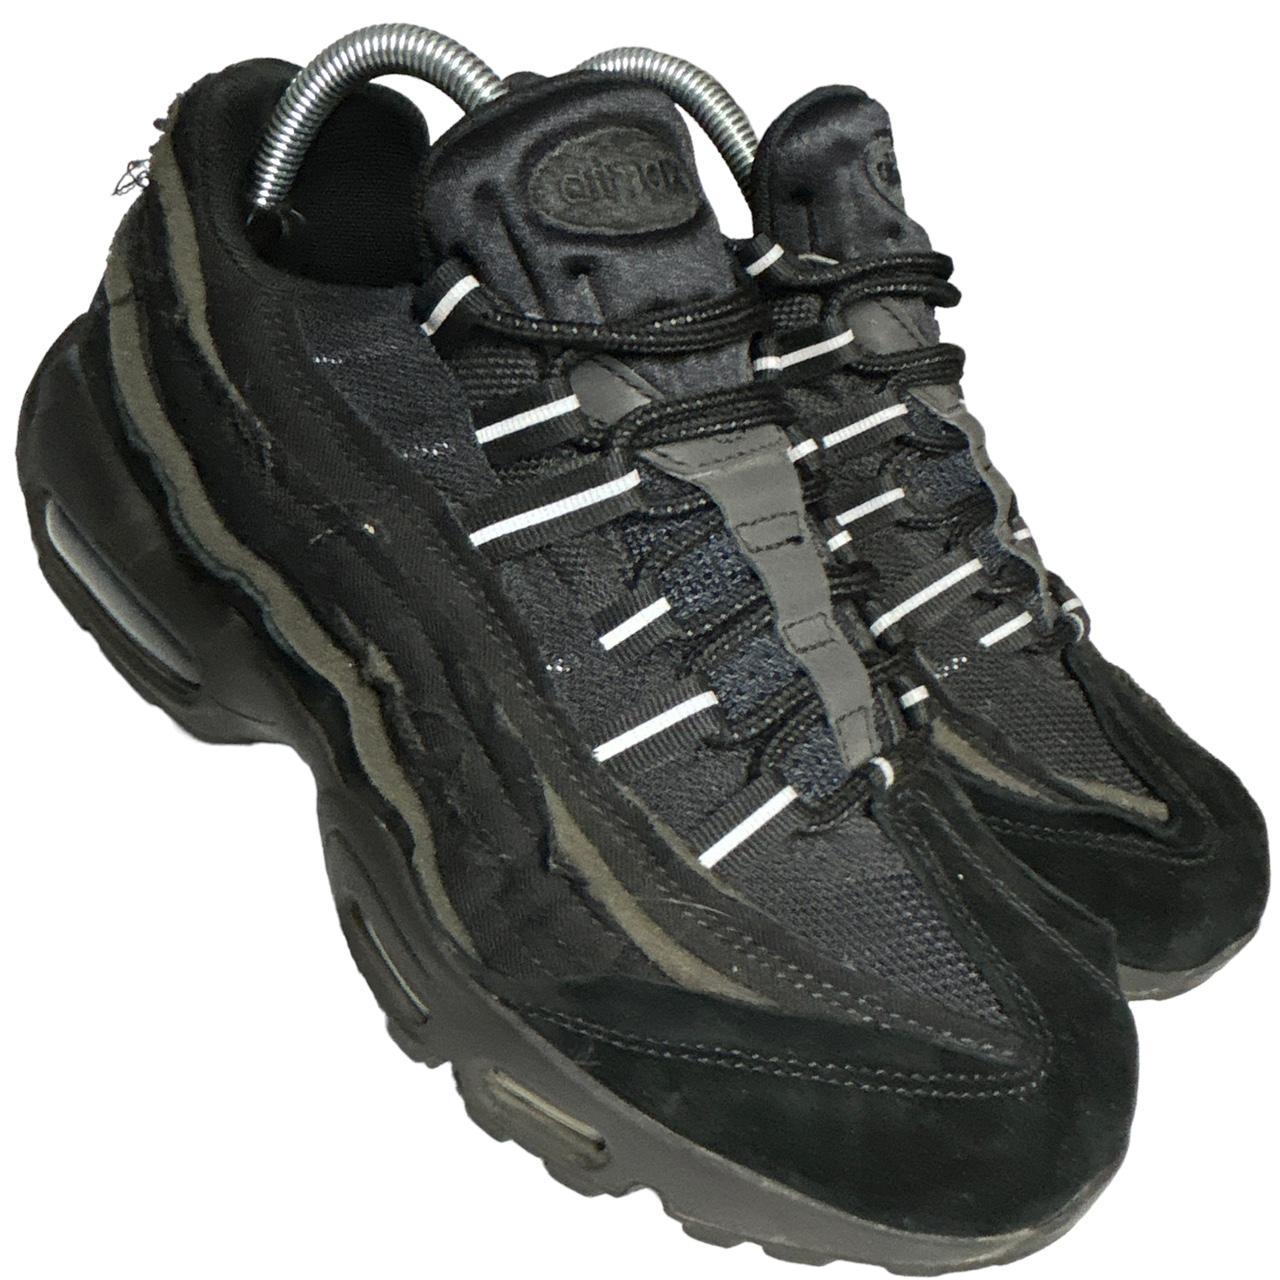 Nike CDG 95s Size UK 6 (US 7) Black CDG air max... - Depop